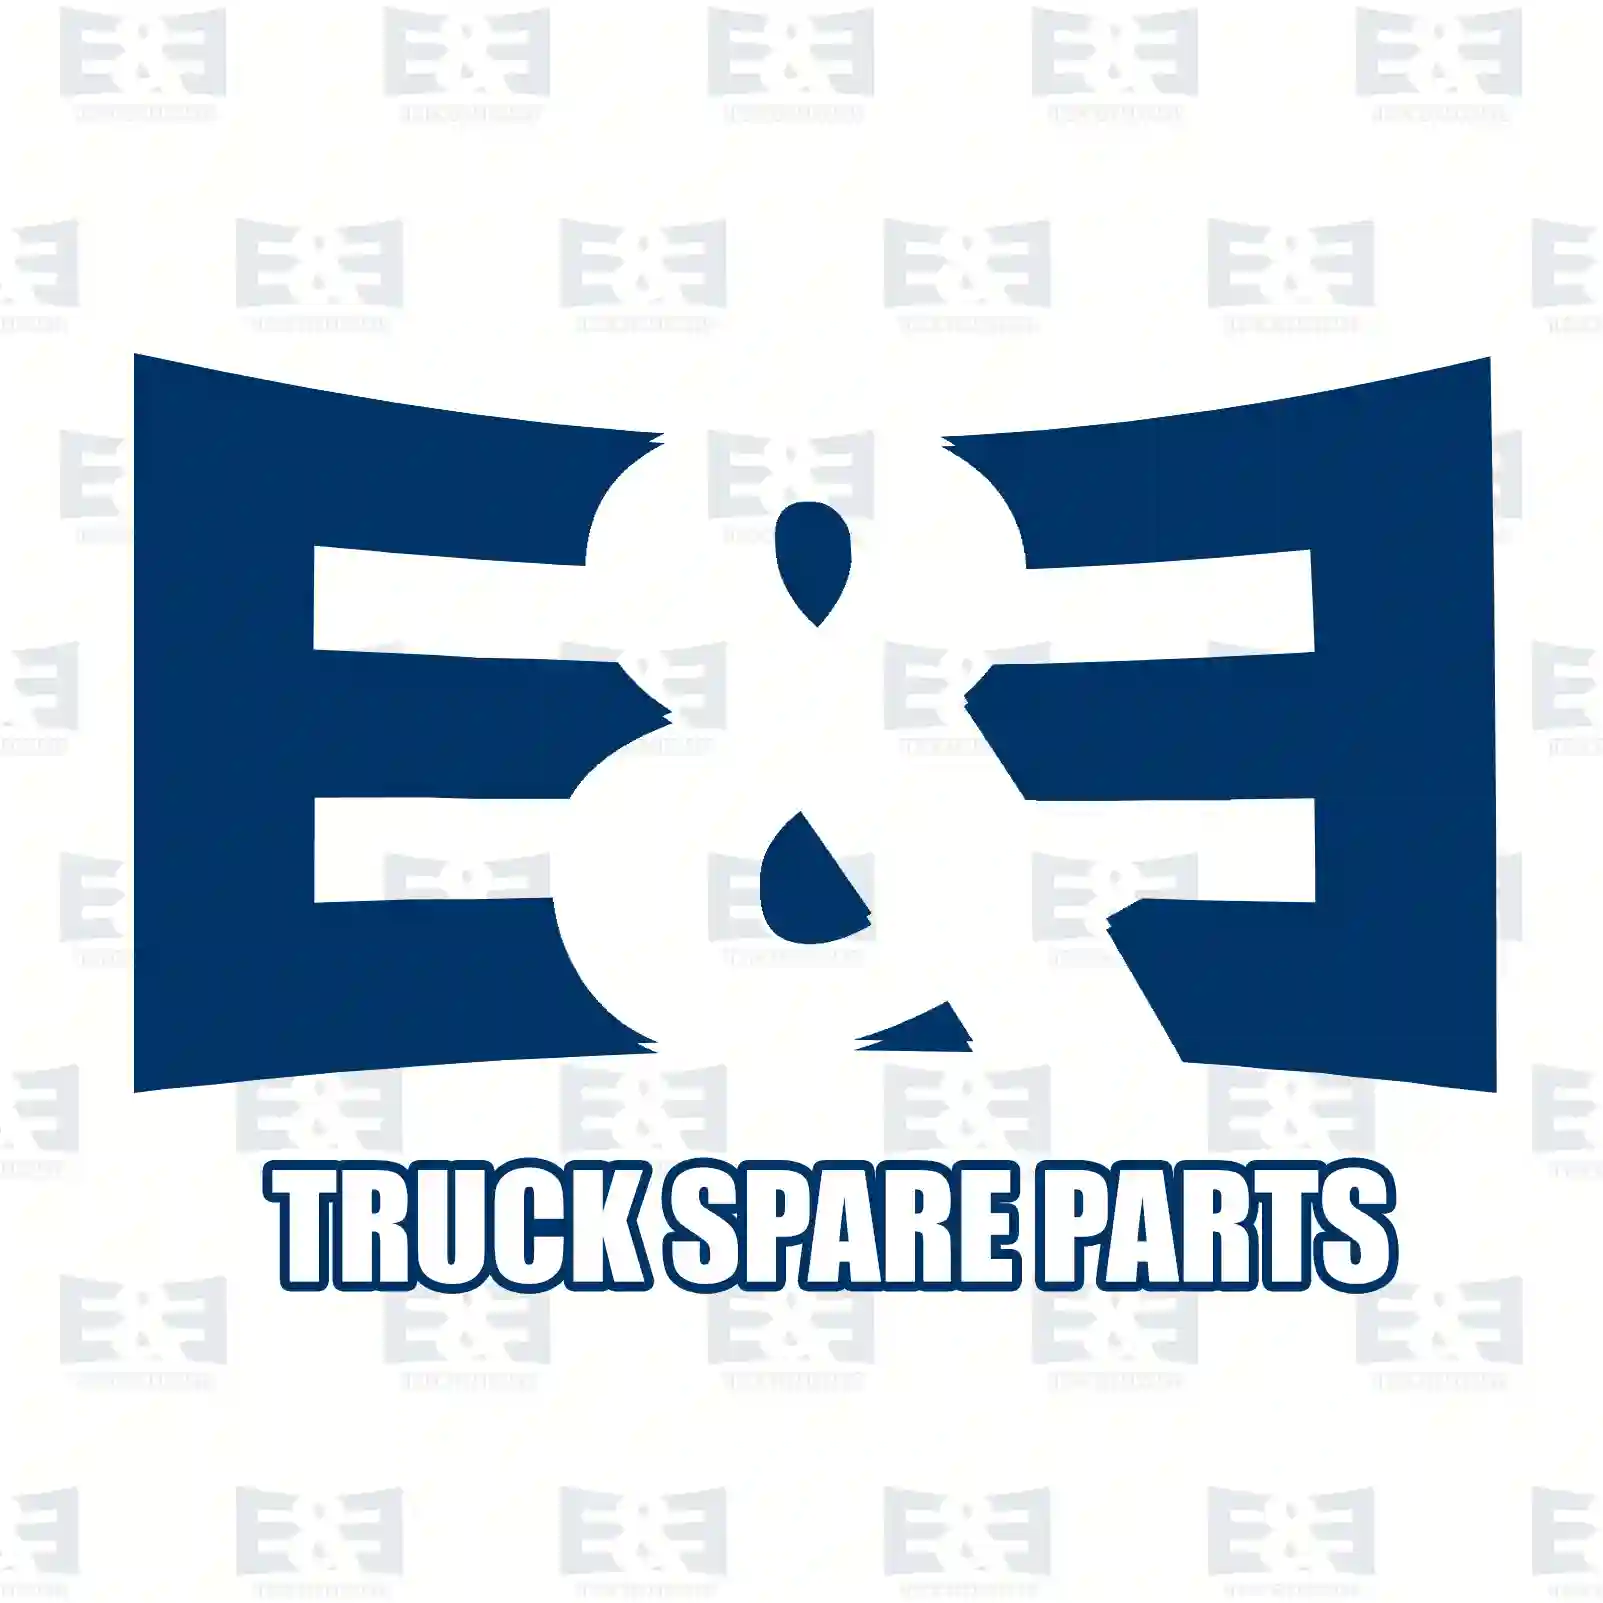 Ball joint, right hand thread, 2E2277714, 5010242799, ZG40147-0008 ||  2E2277714 E&E Truck Spare Parts | Truck Spare Parts, Auotomotive Spare Parts Ball joint, right hand thread, 2E2277714, 5010242799, ZG40147-0008 ||  2E2277714 E&E Truck Spare Parts | Truck Spare Parts, Auotomotive Spare Parts